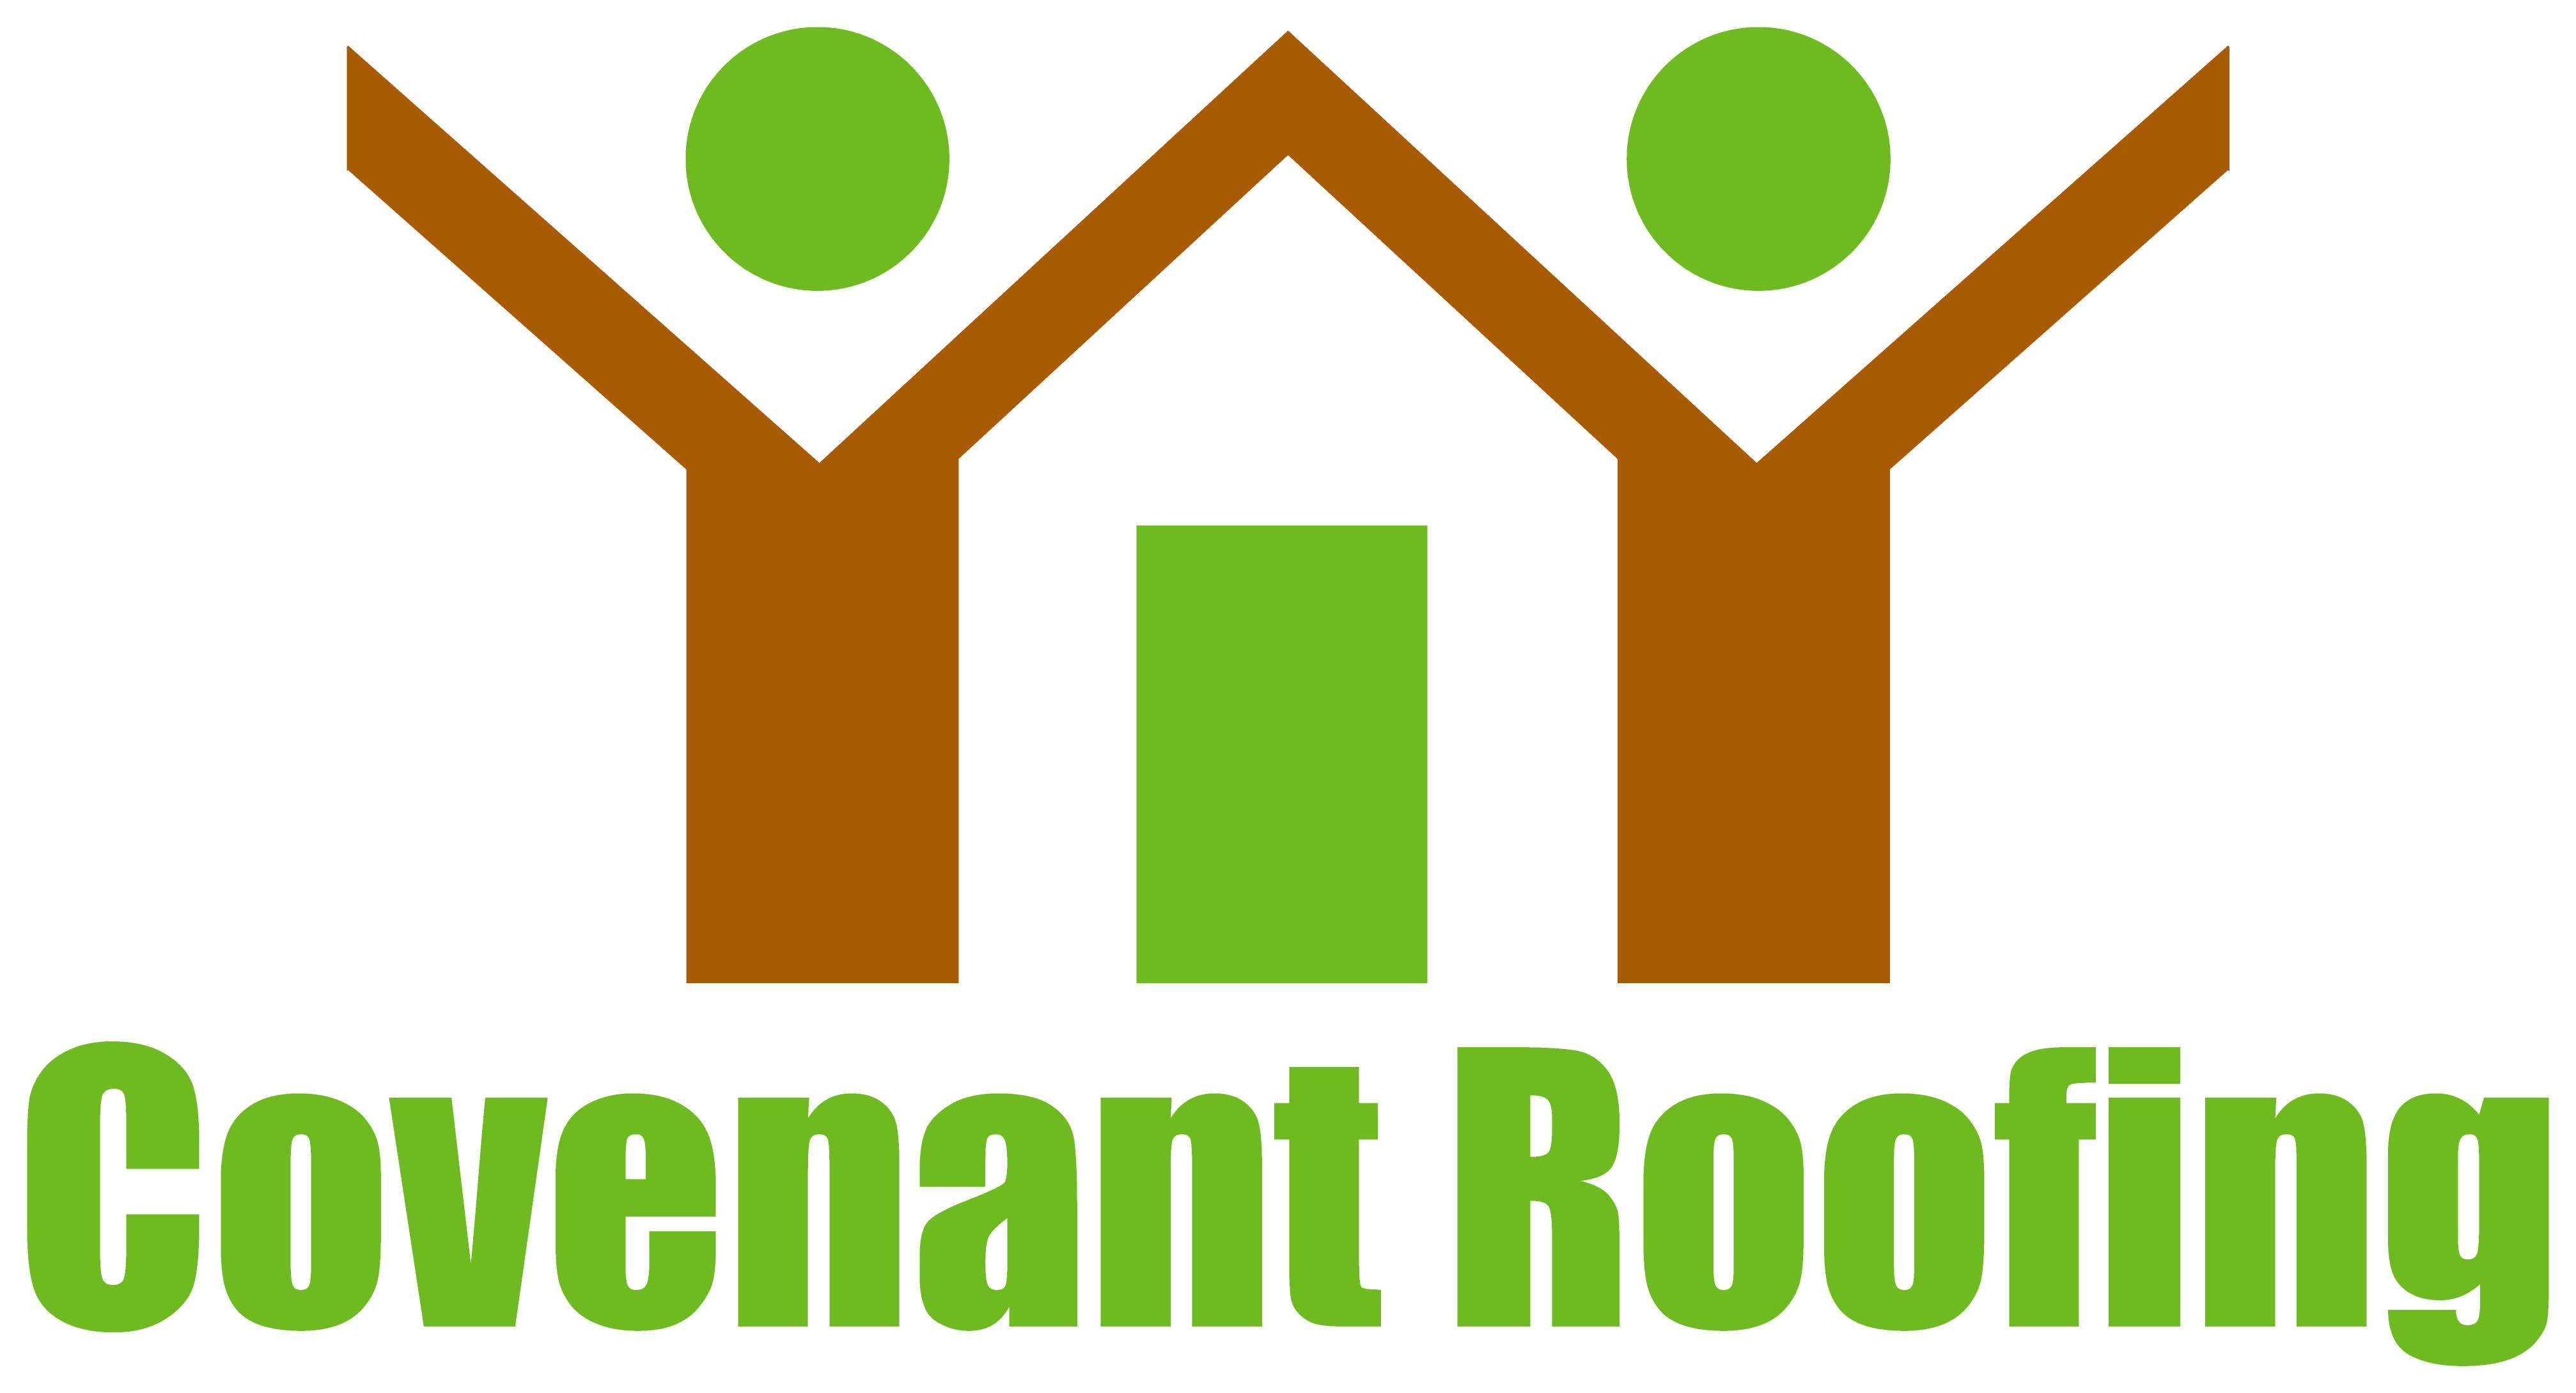 Covenant Roofing & Construction, LLC Logo